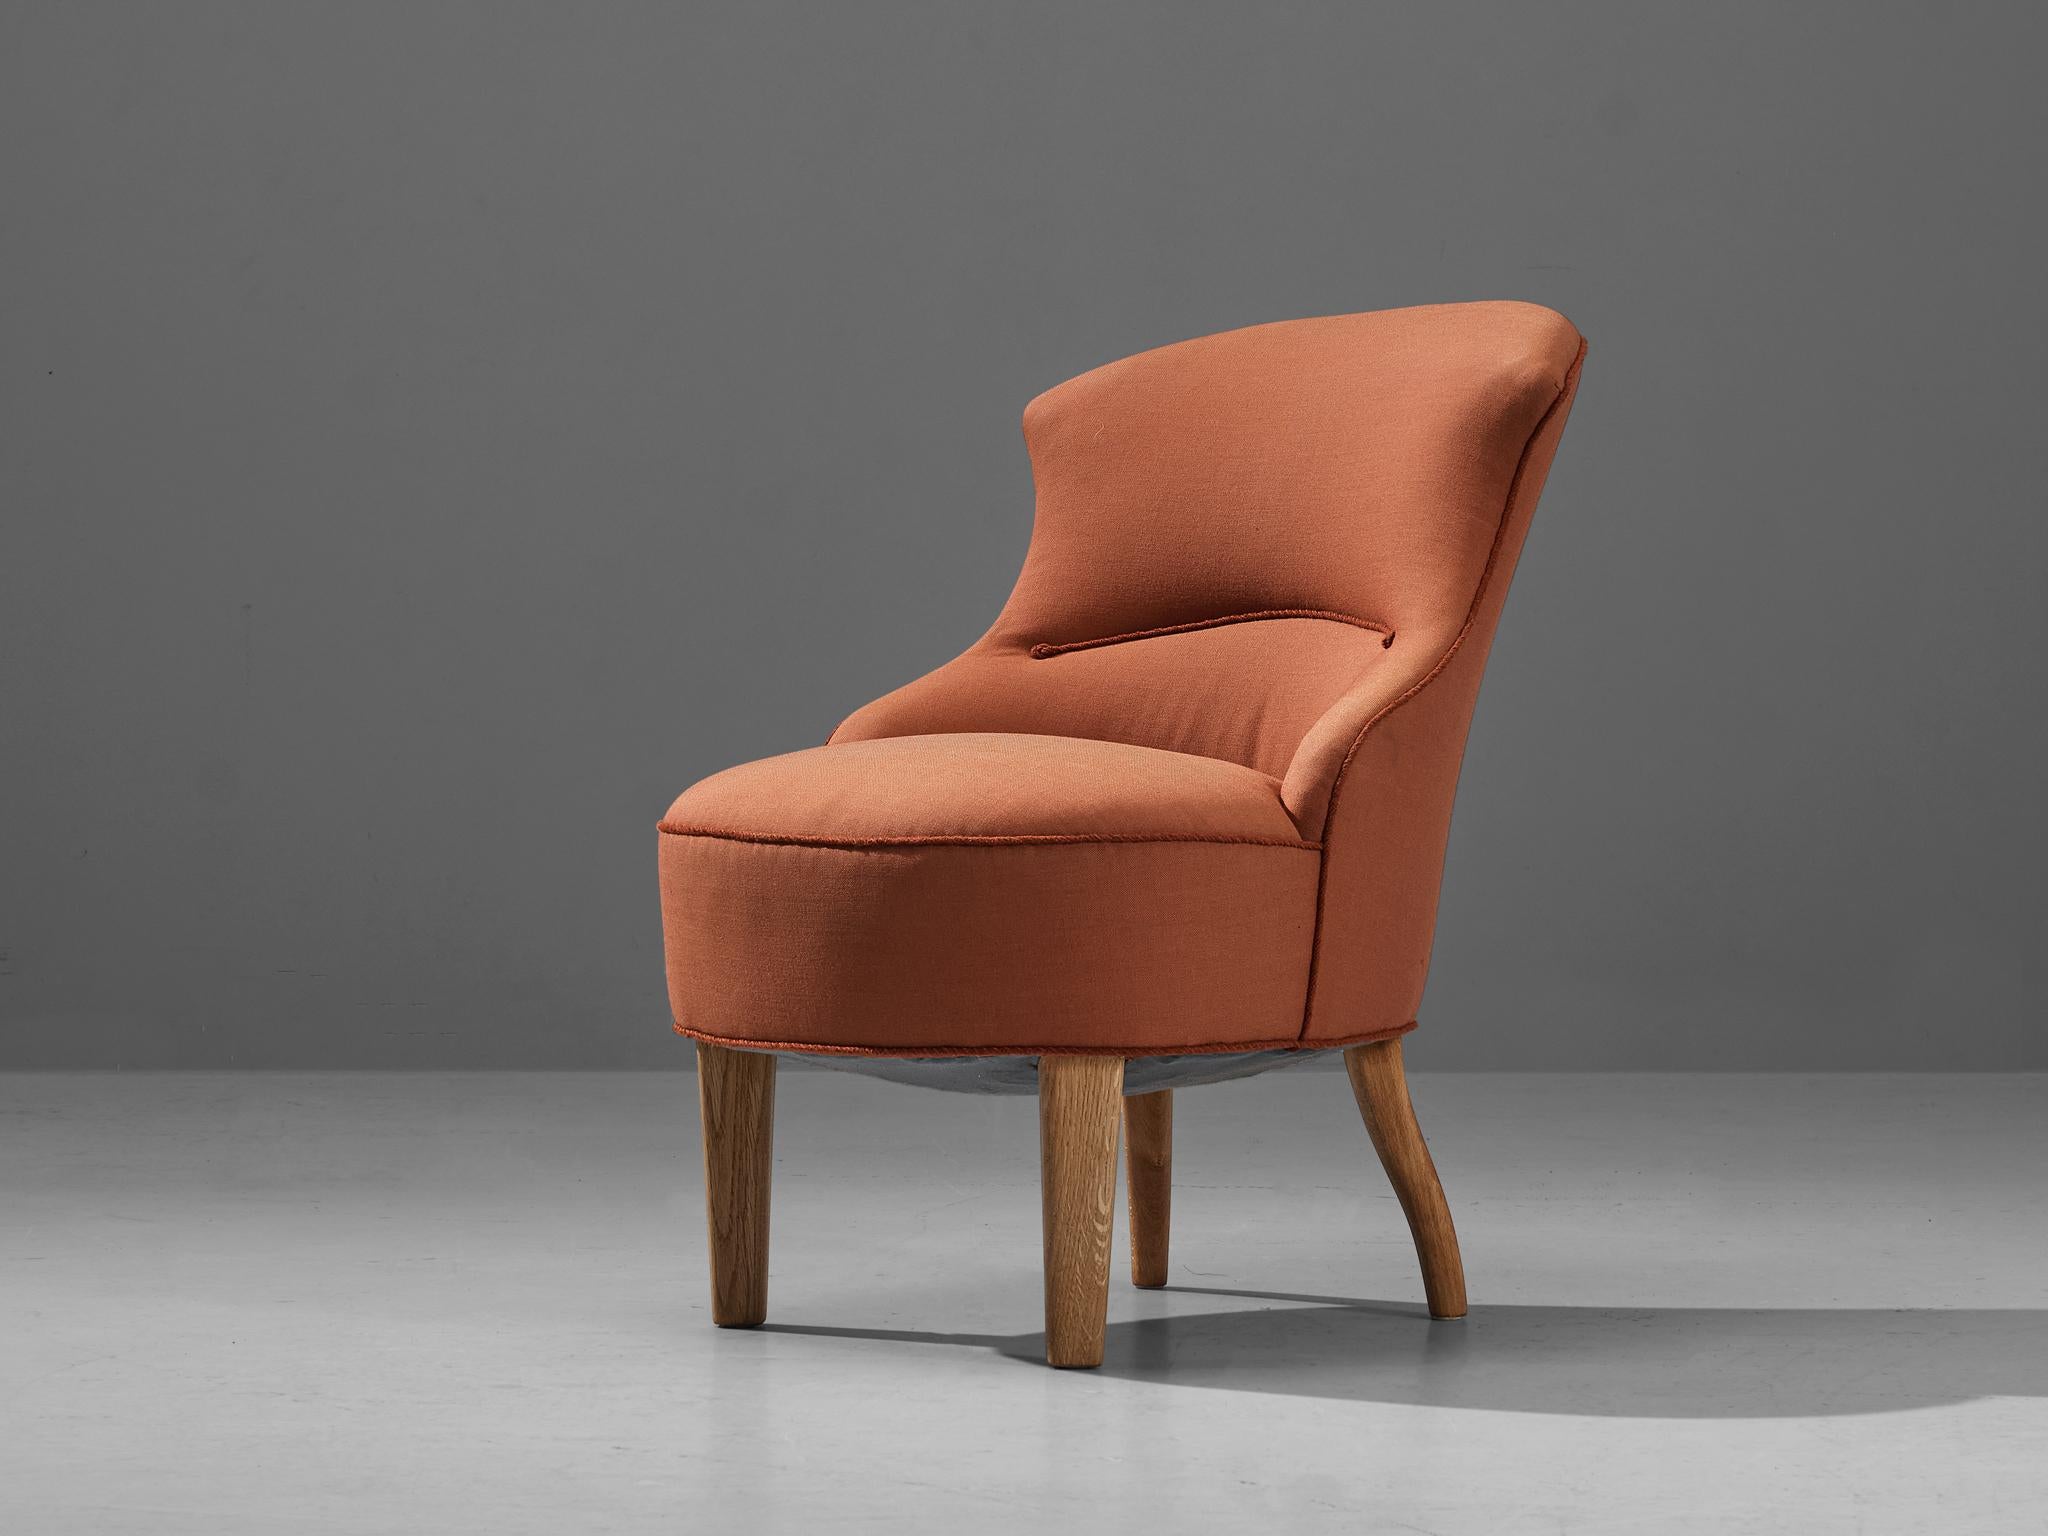 Scandinavian Modern Danish Lounge Chair in Oak and Salmon Orange Upholstery